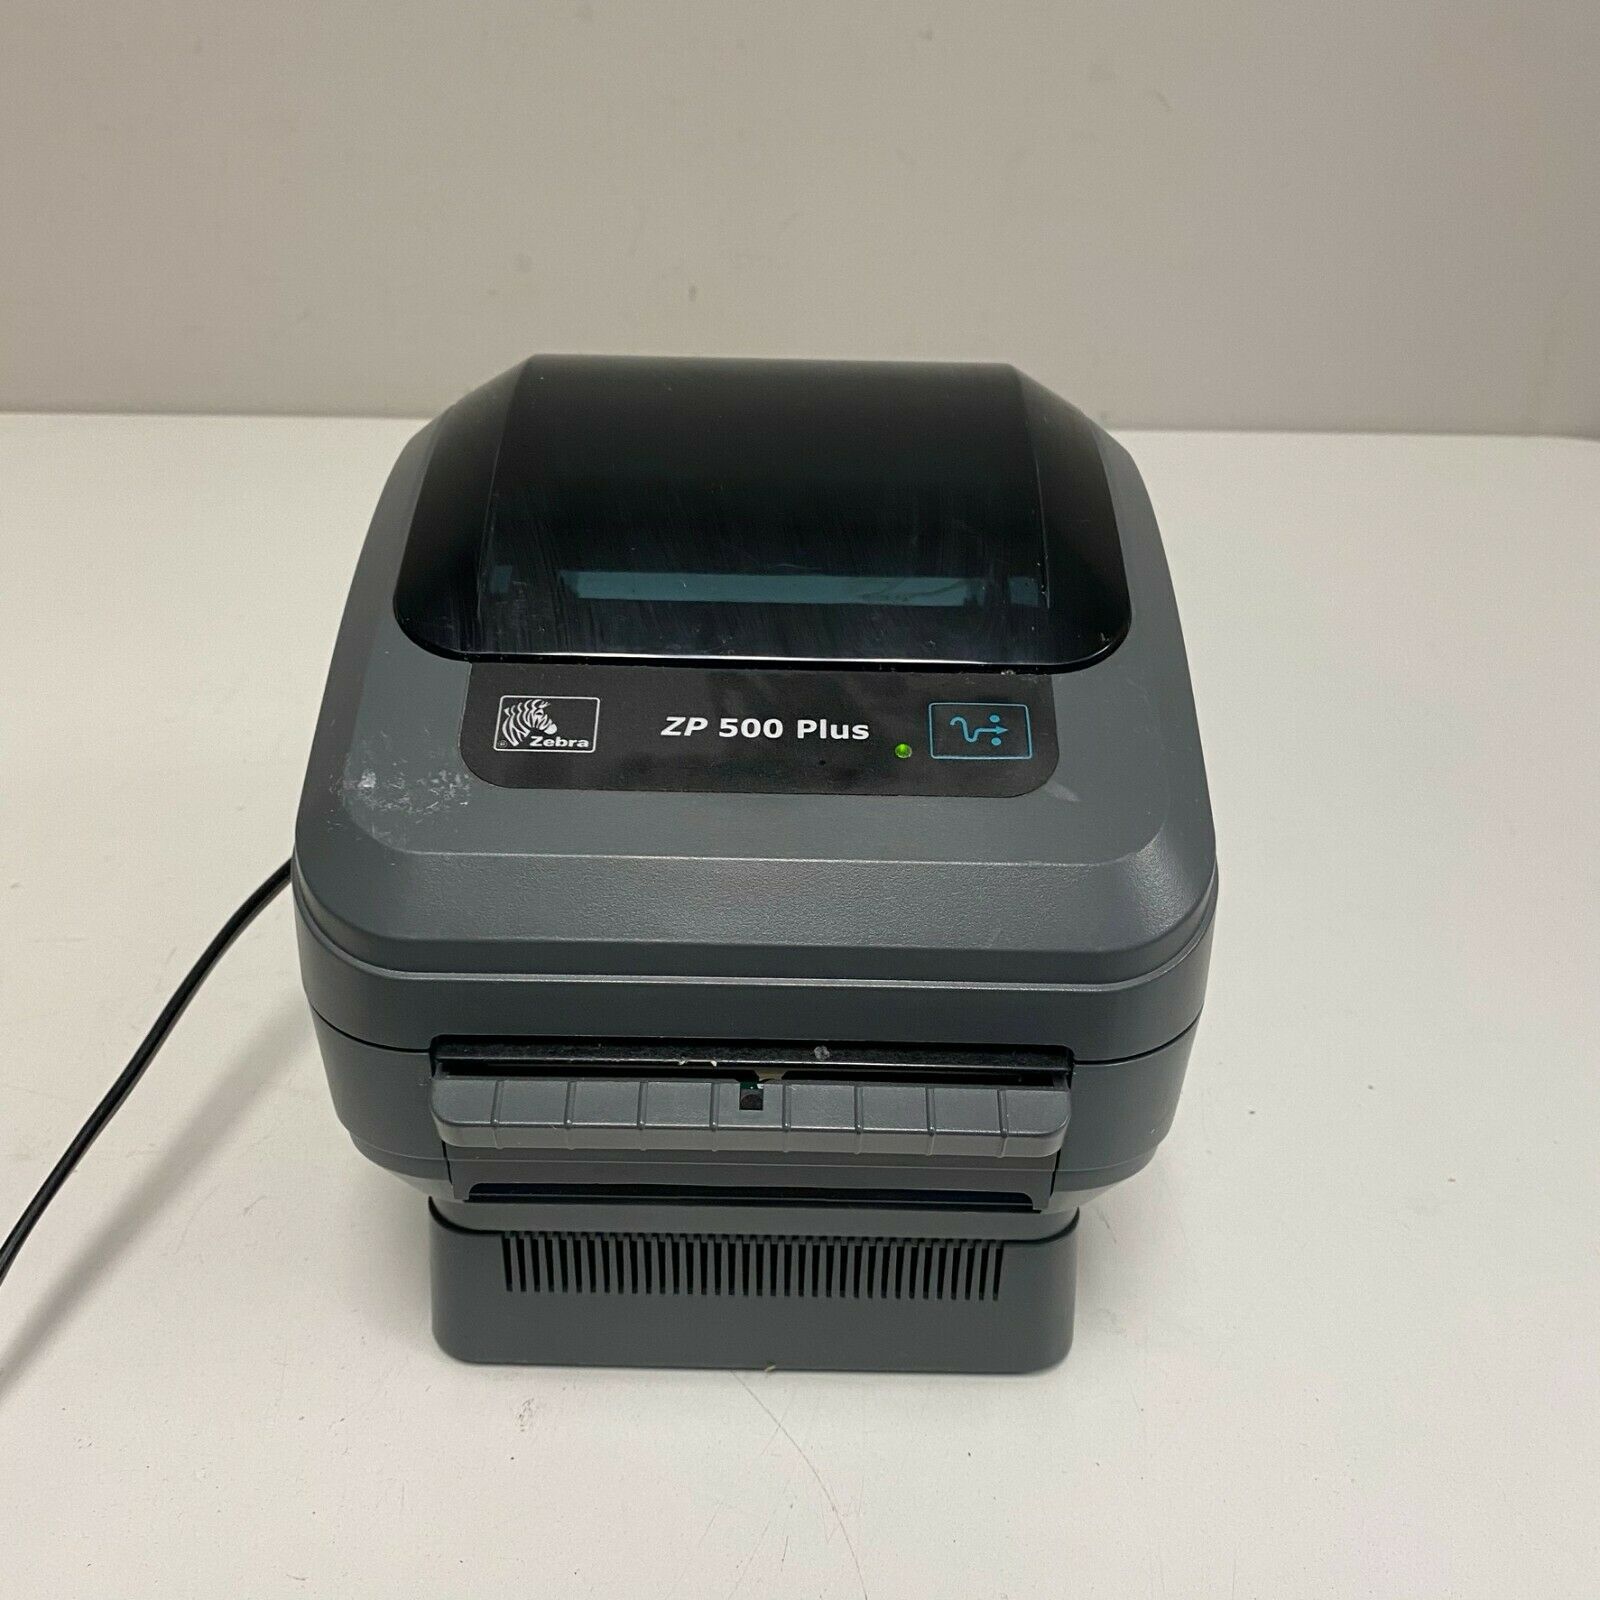 Принтер Zebra ZP500, что пришел на замену Zebra ZP450